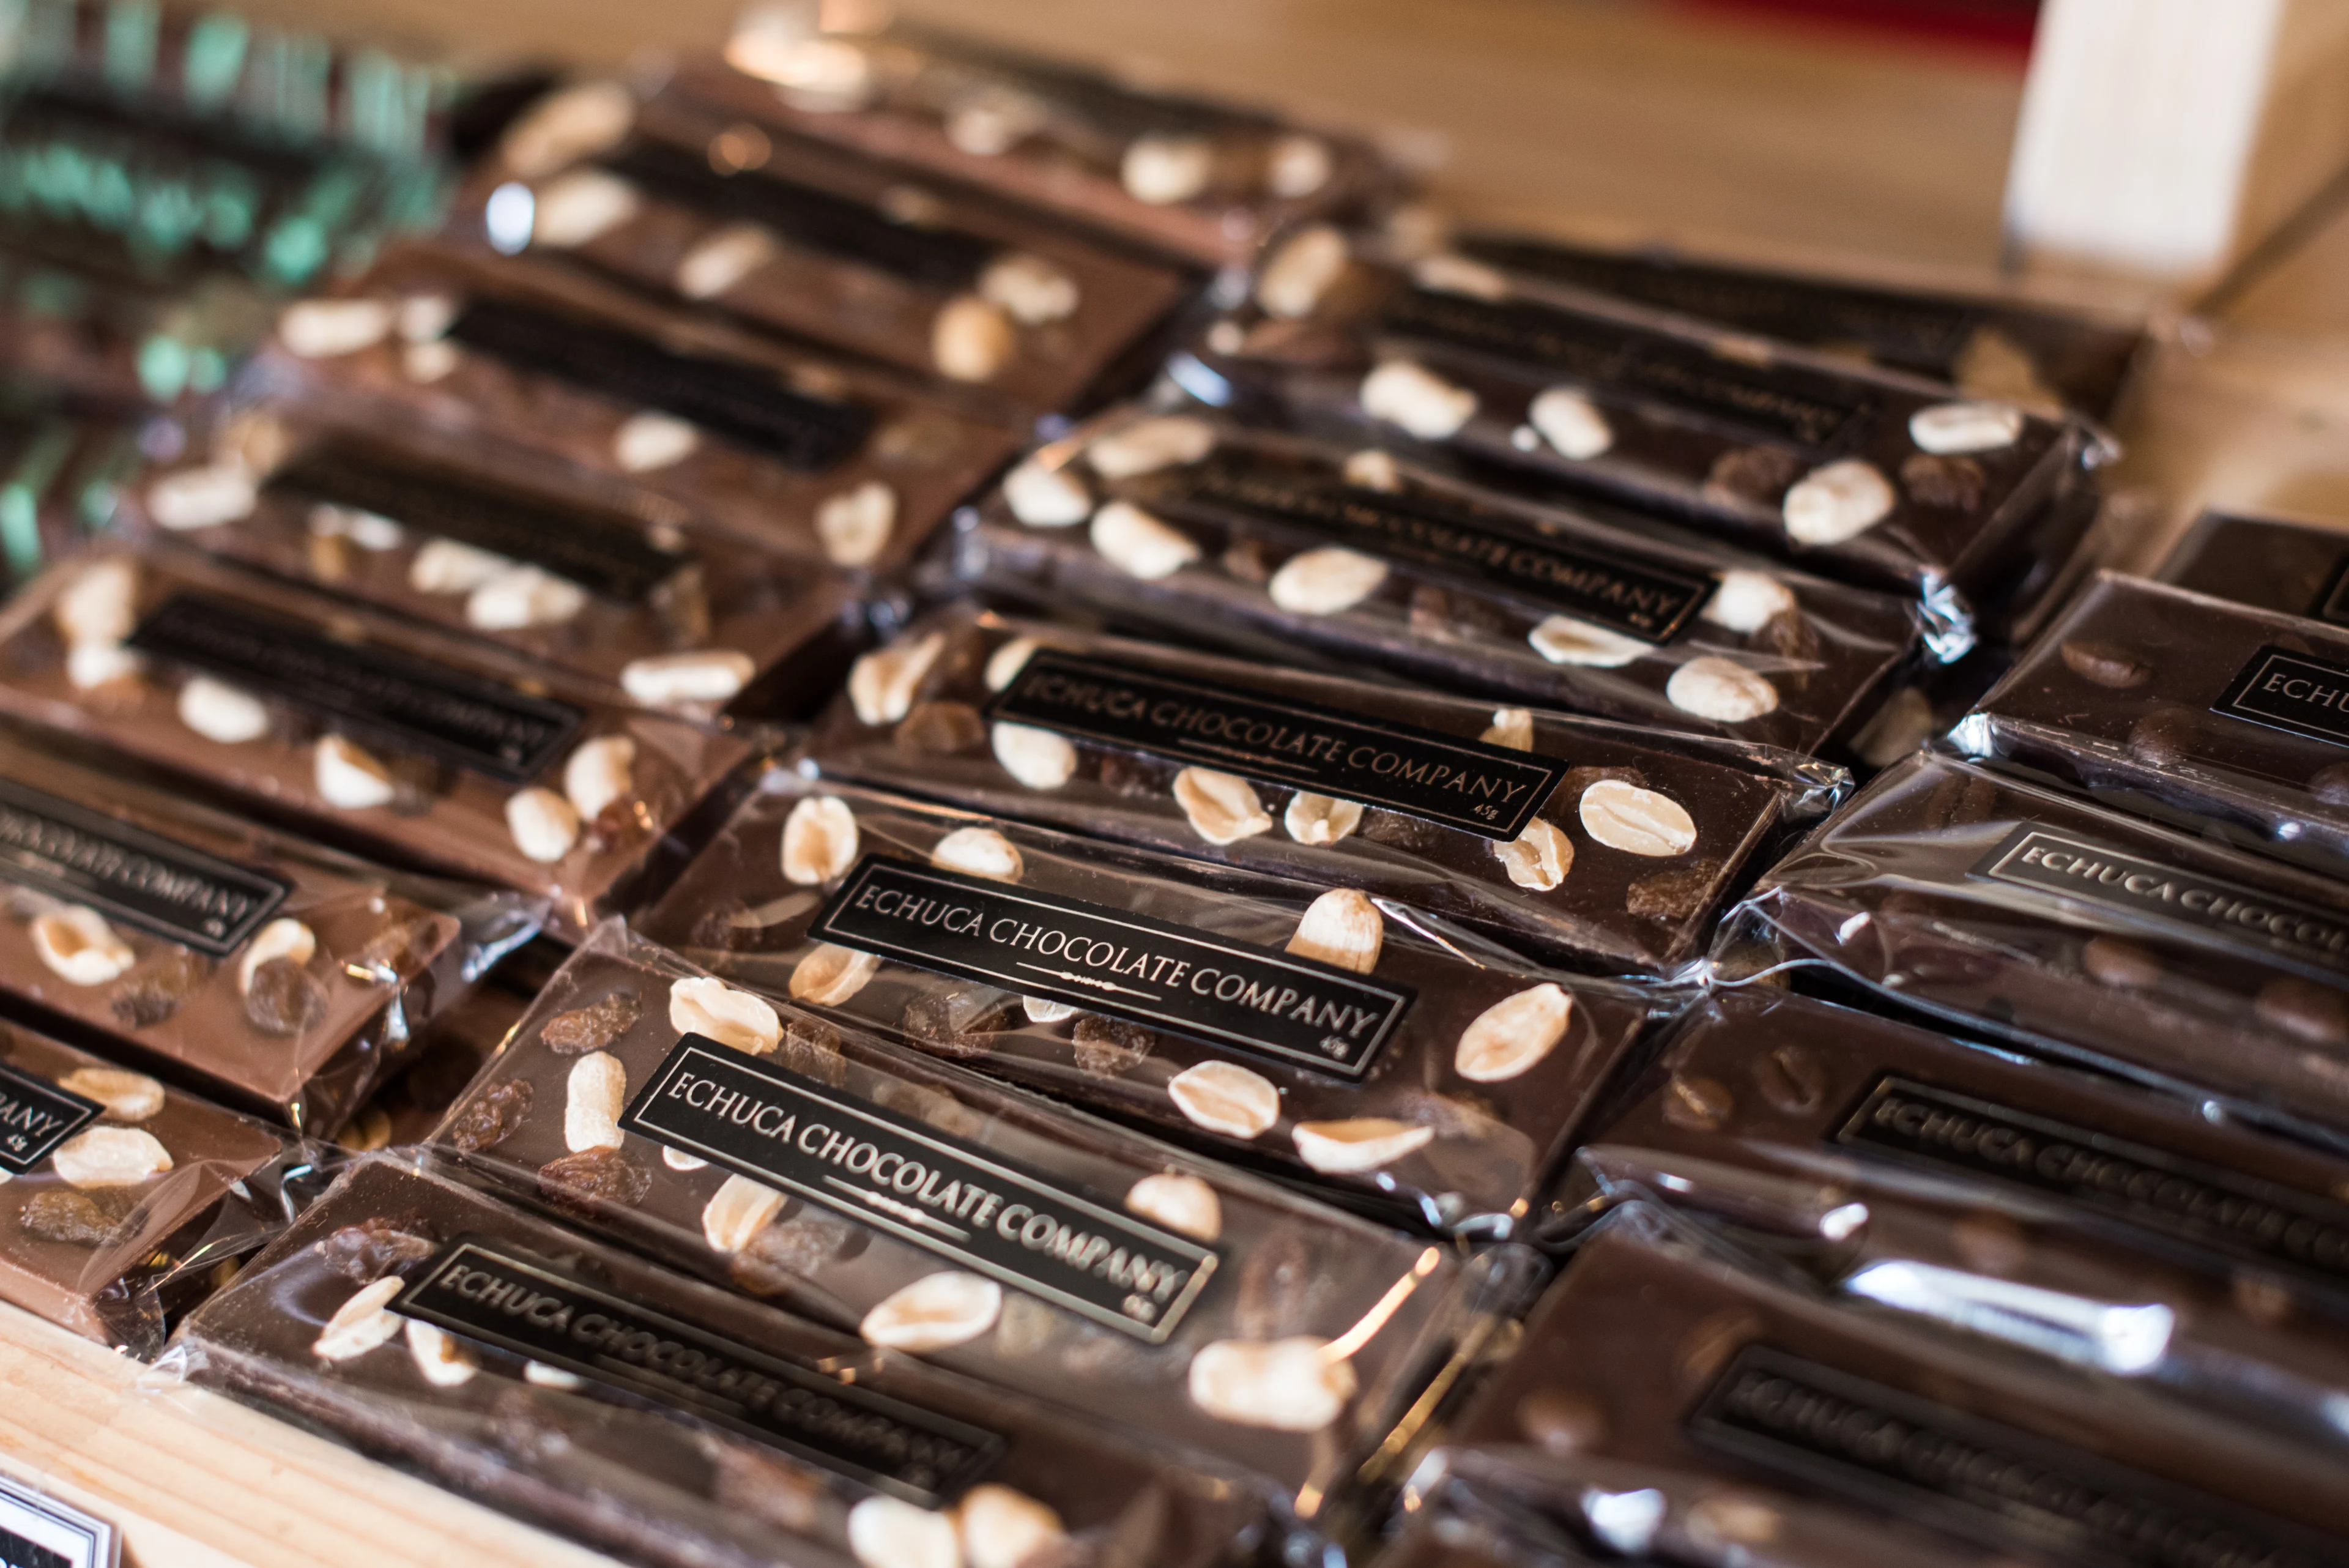 Handmade chocolate bars at the Echuca Chocolate Company